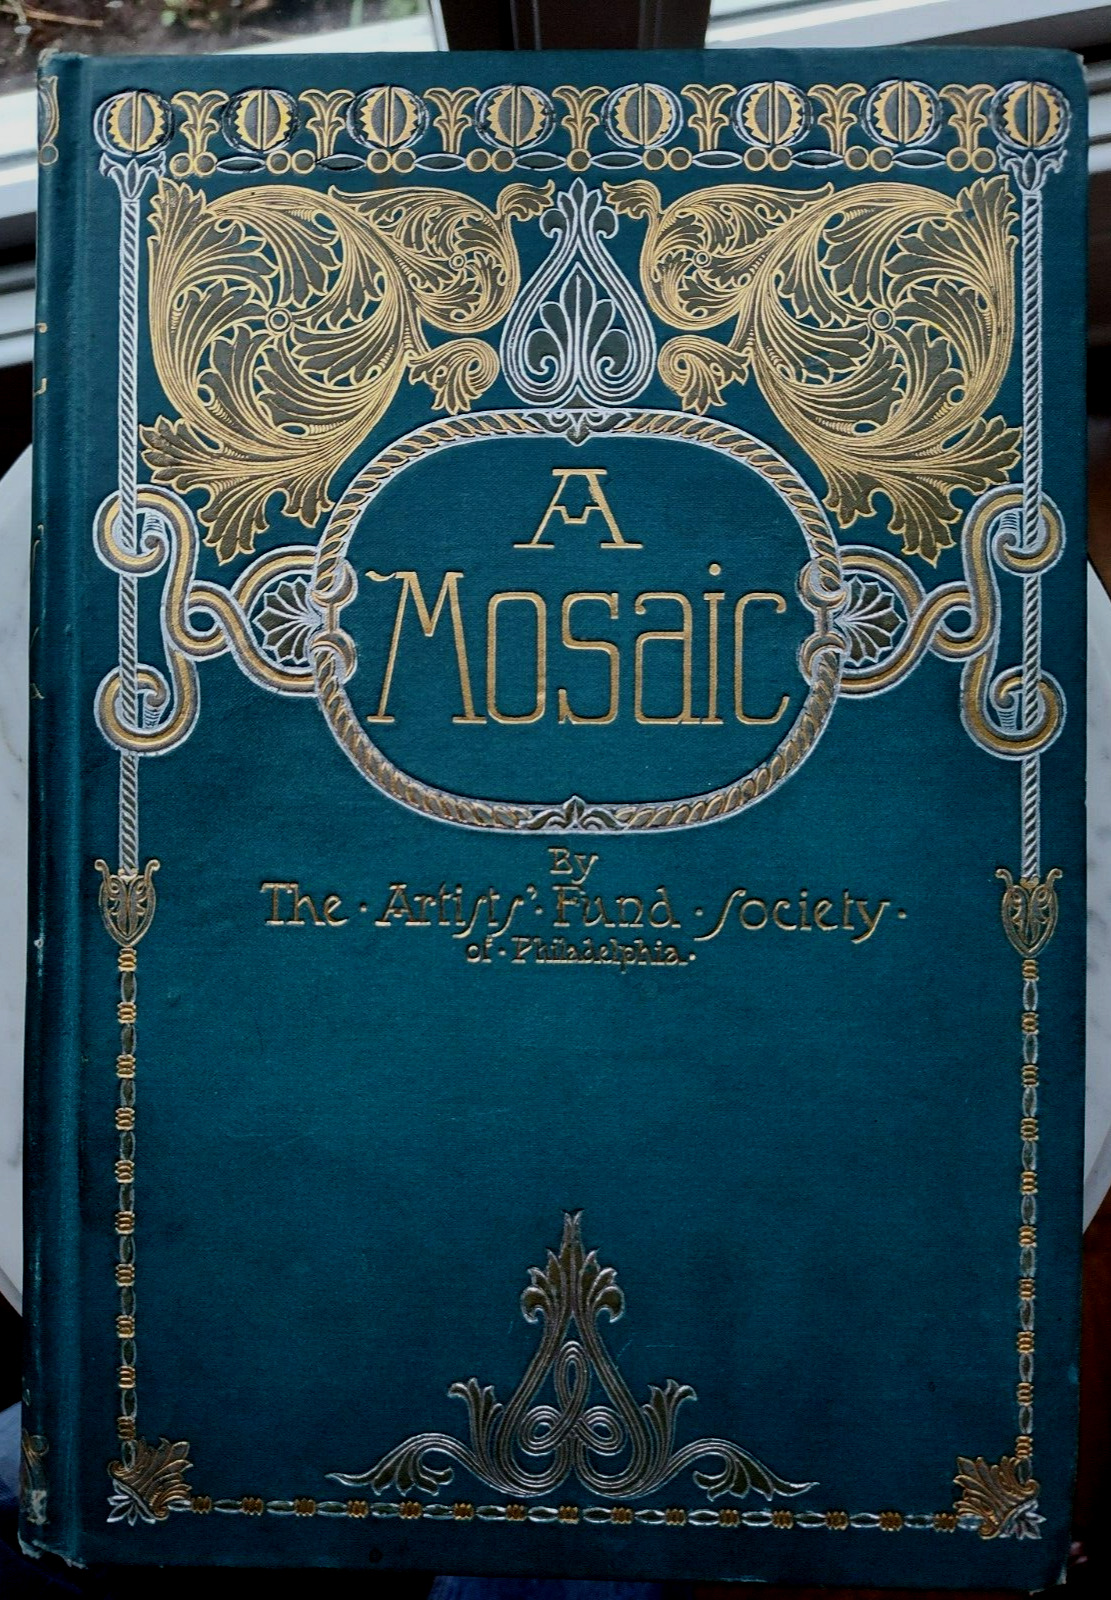 A Mosaic 1891 Artists Fund Society of Philadelphia